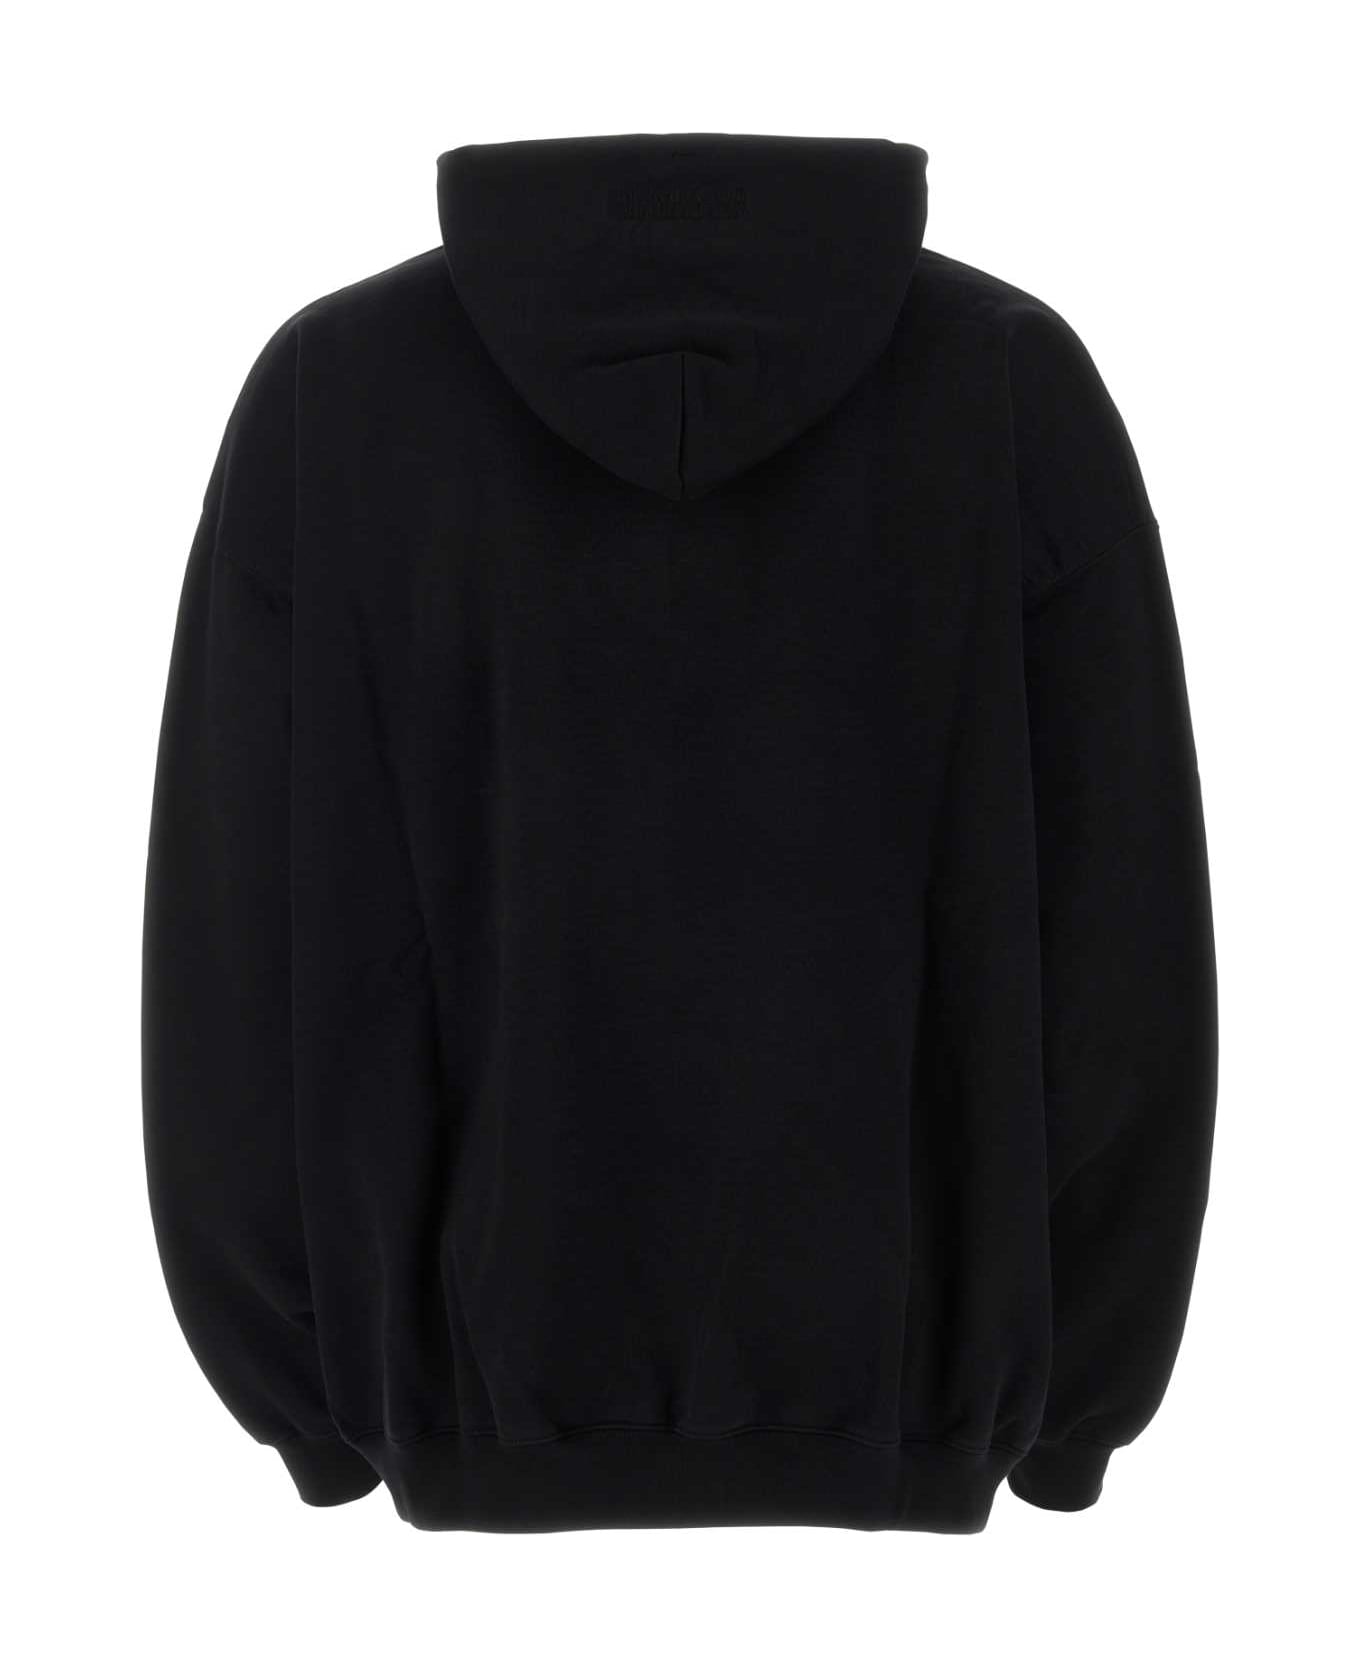 VETEMENTS Black Cotton Blend Oversize Sweatshirt - BLACK